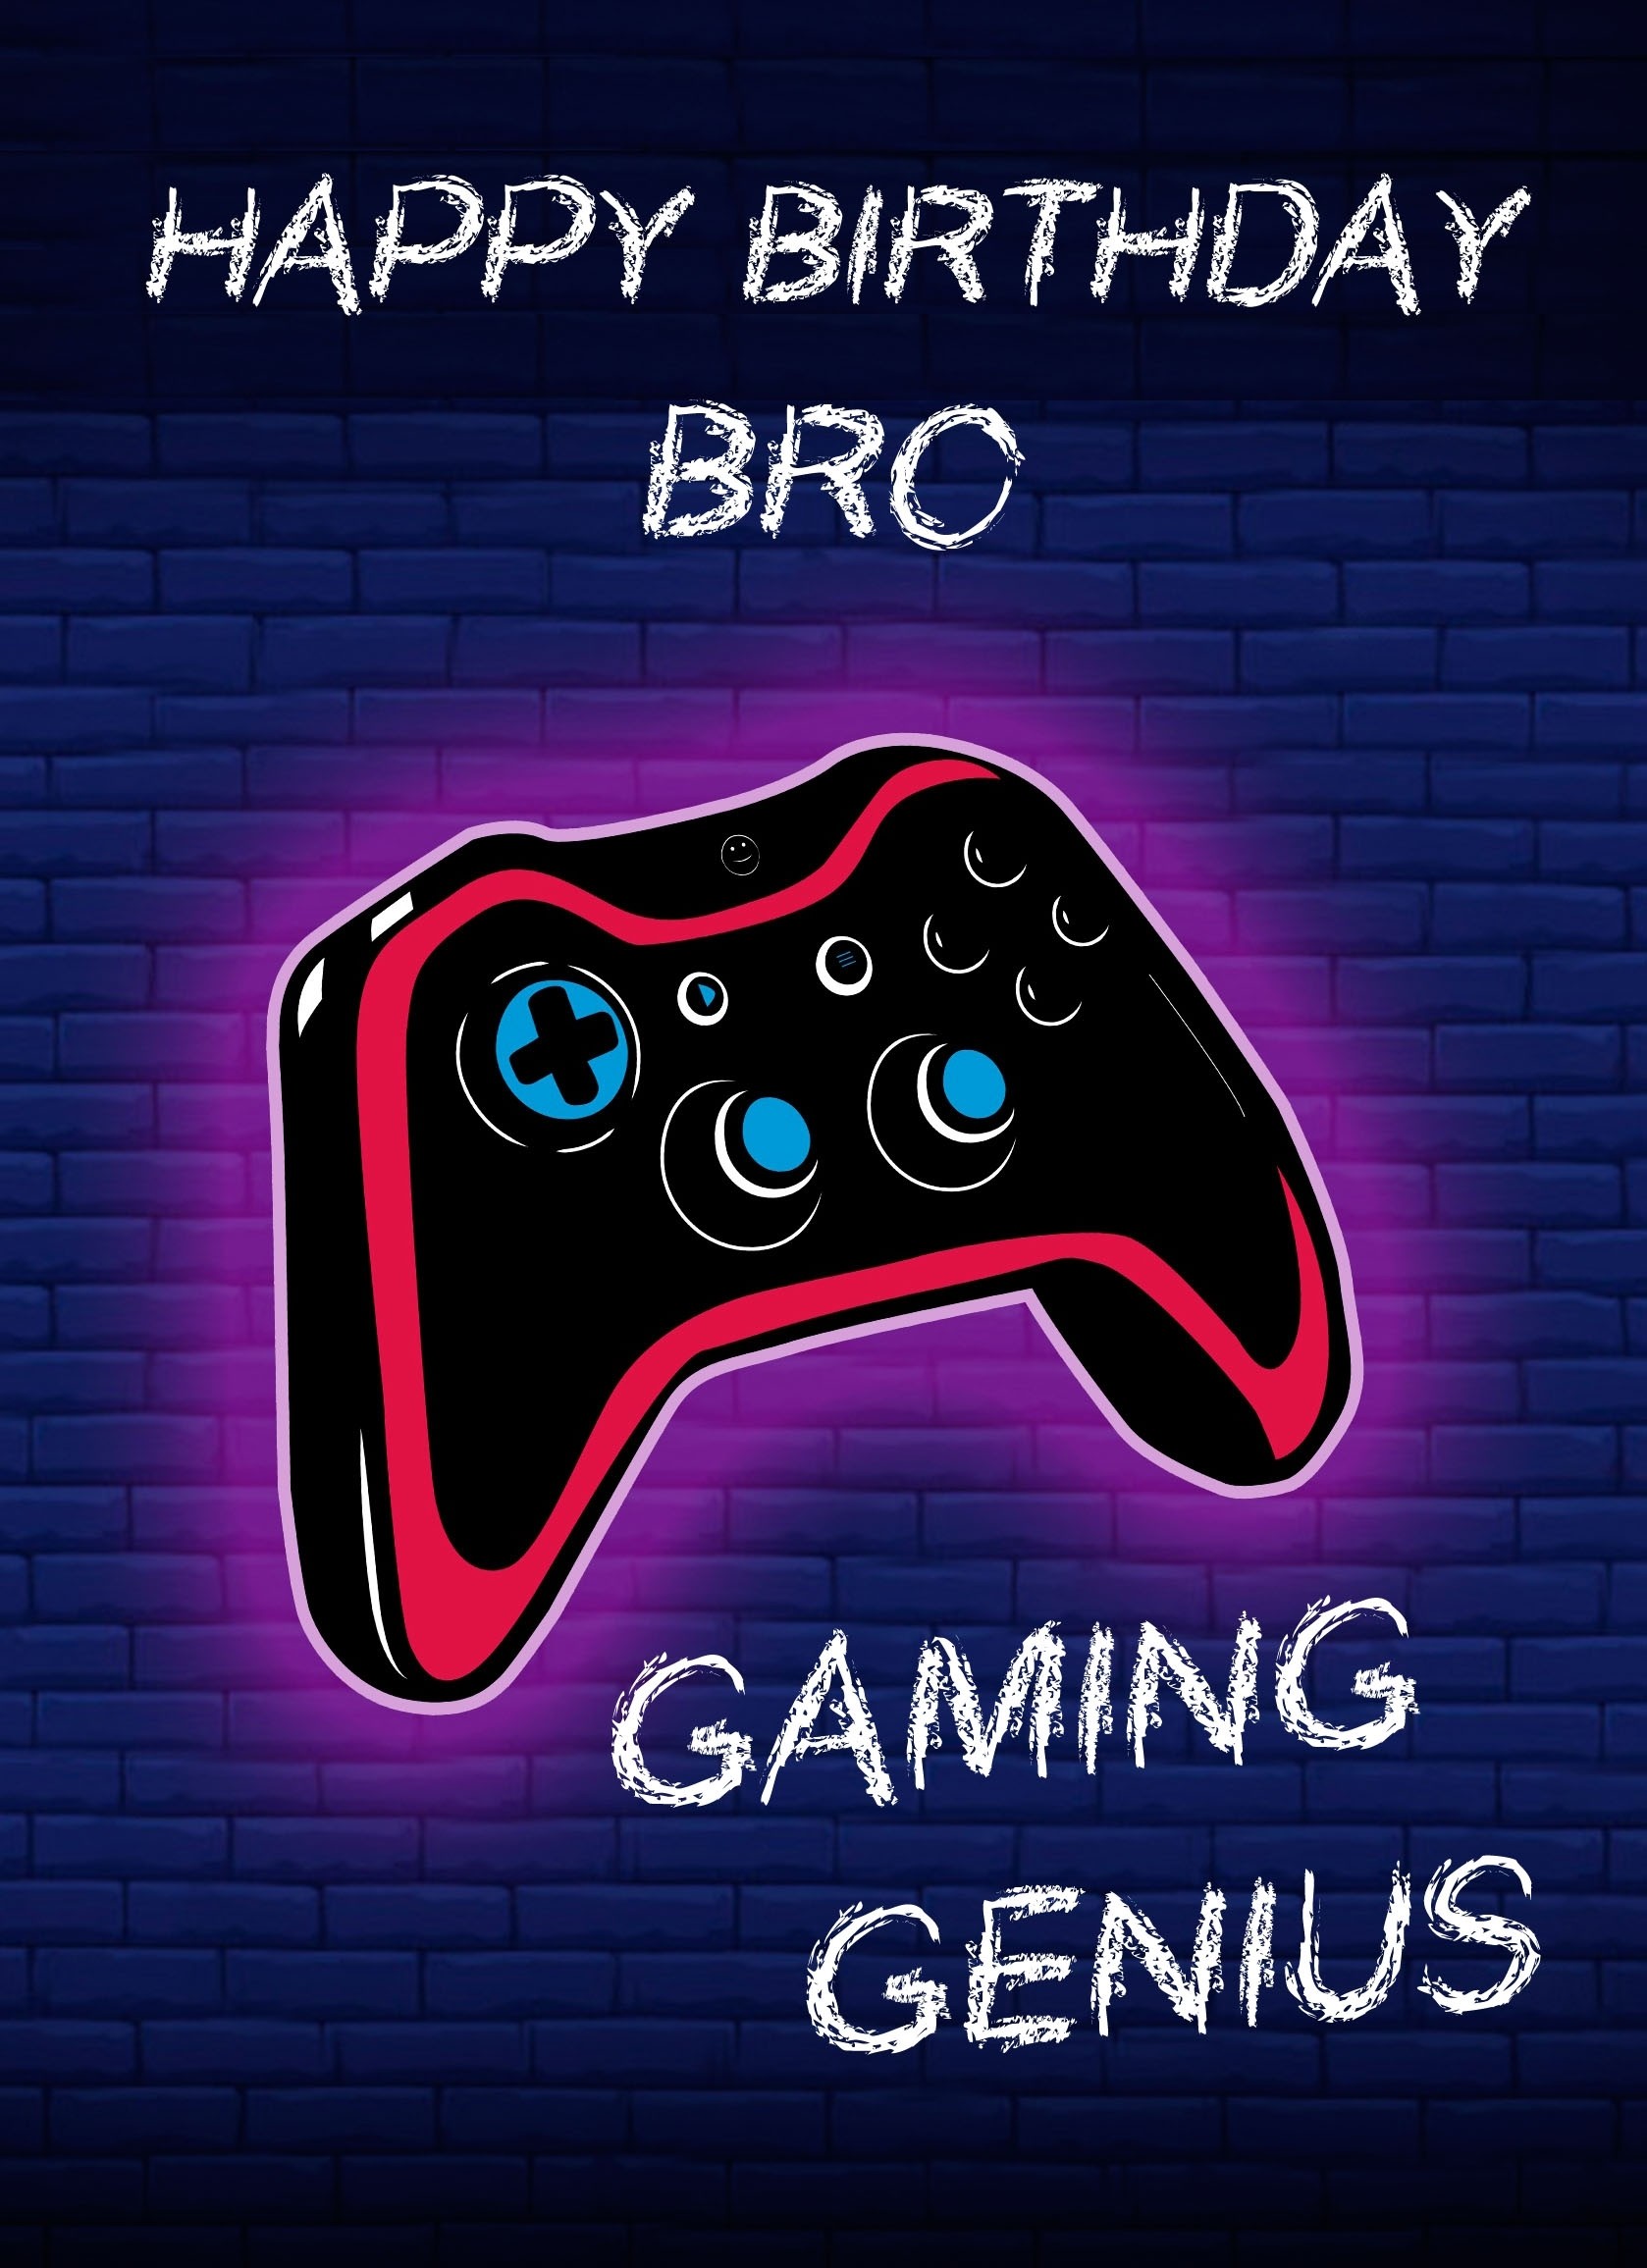 Gamer Birthday Card For Bro (Gaming Genius)